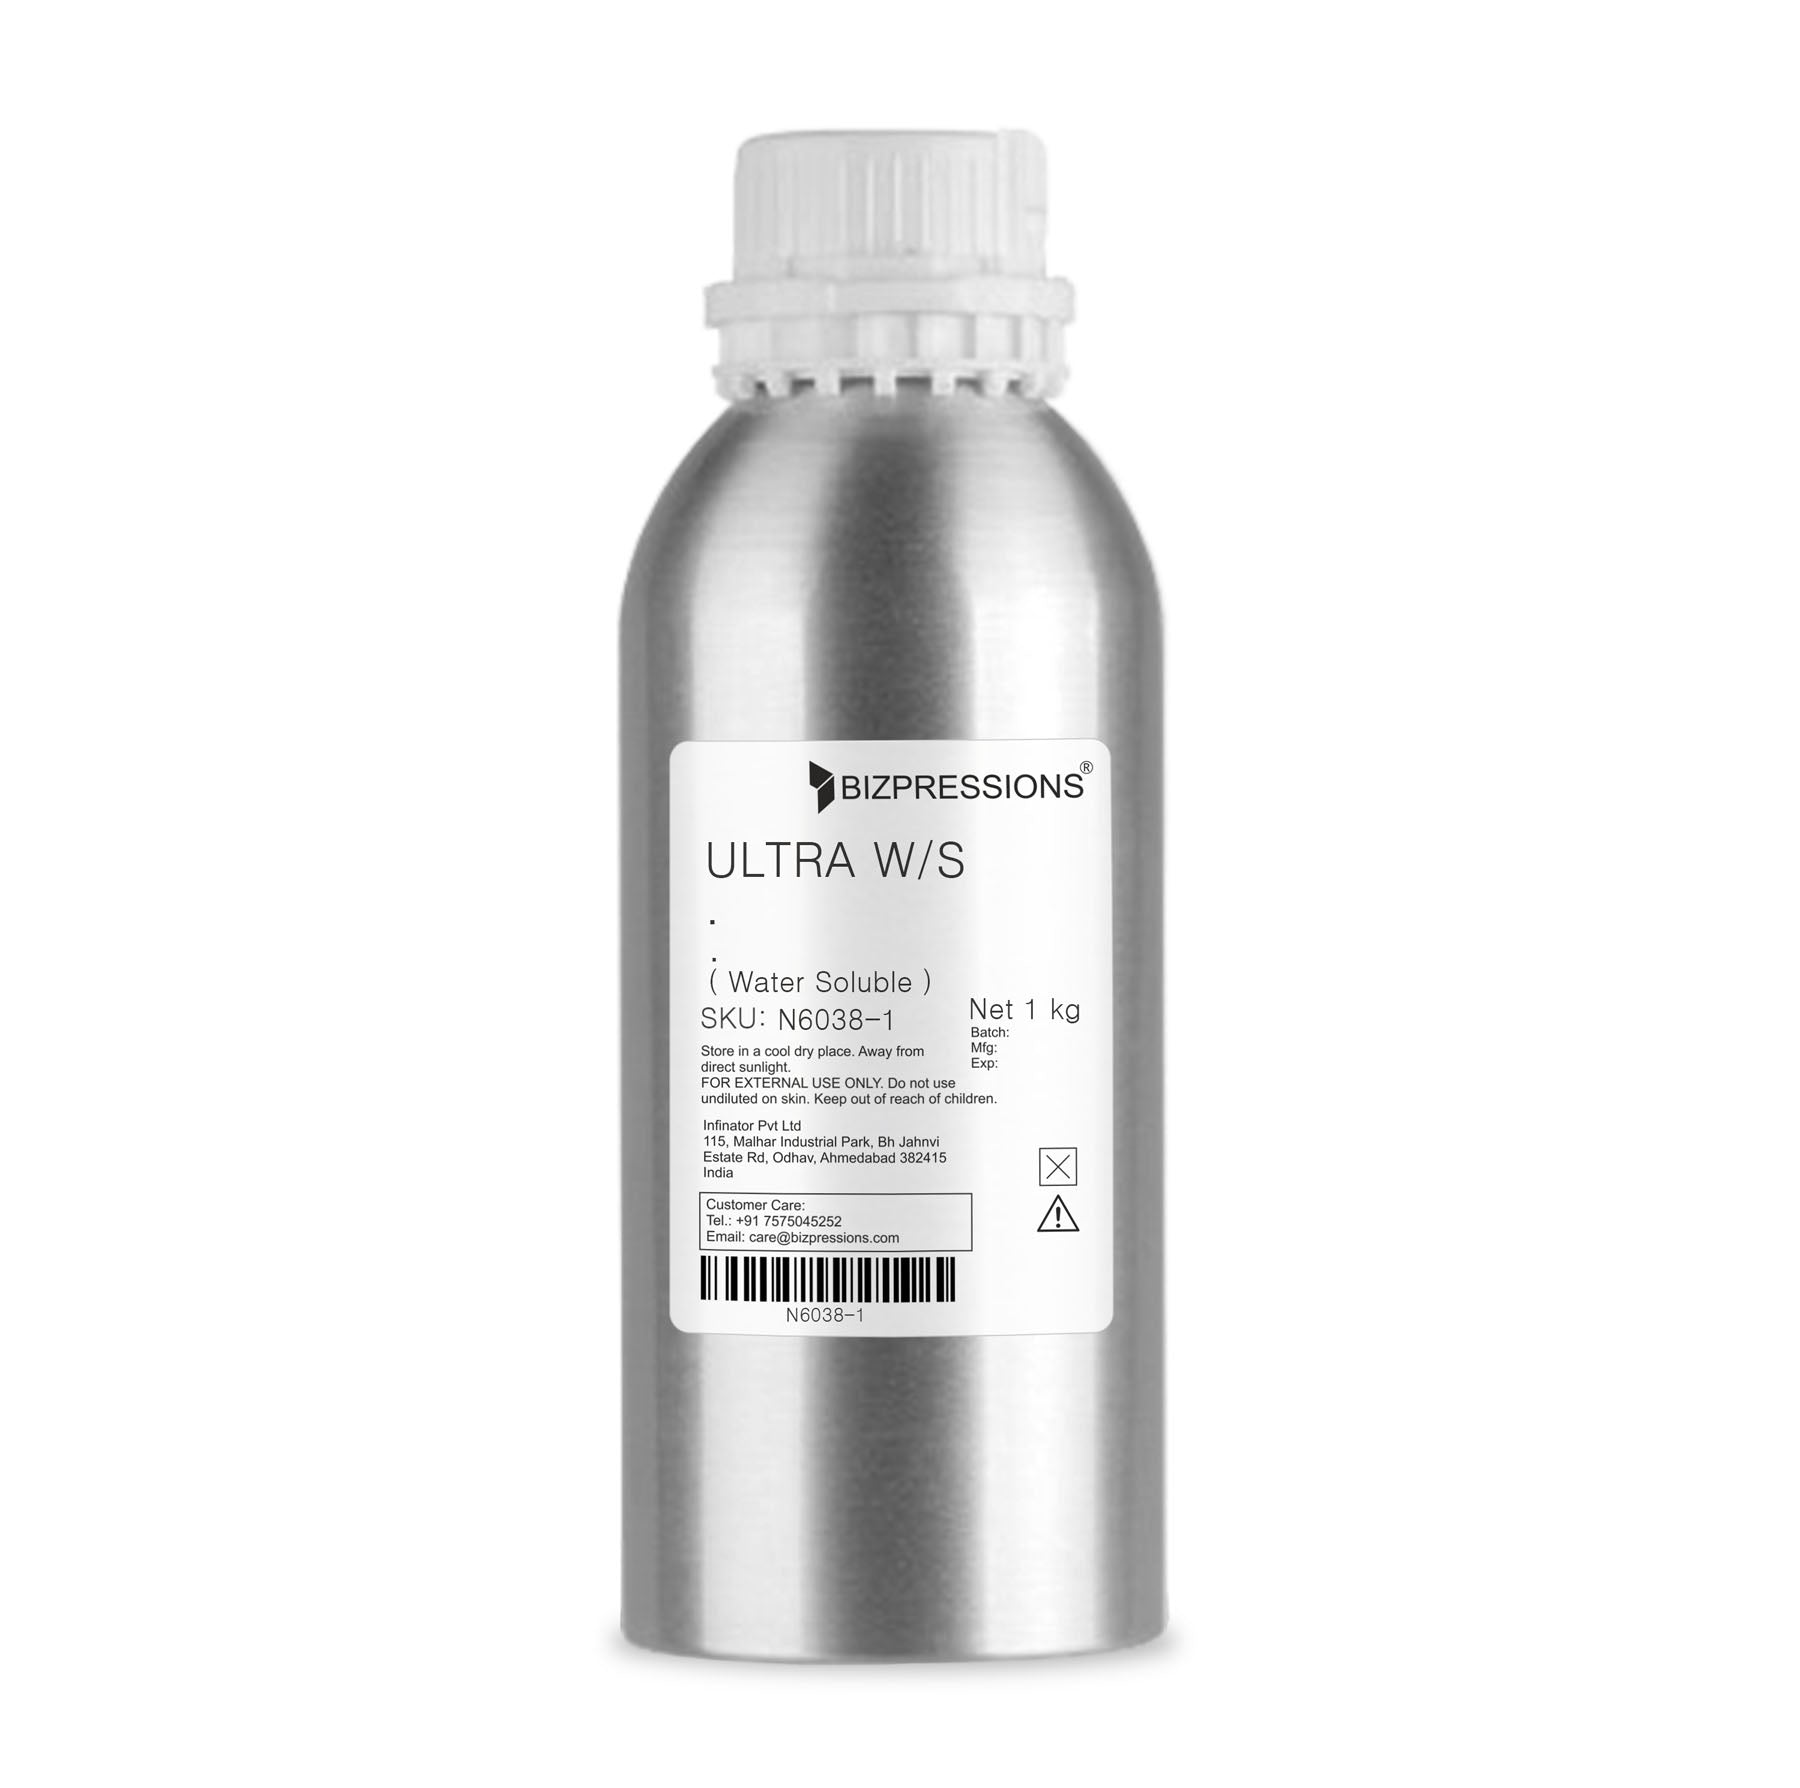 ULTRA W/S - Fragrance ( Water Soluble ) - 1 kg